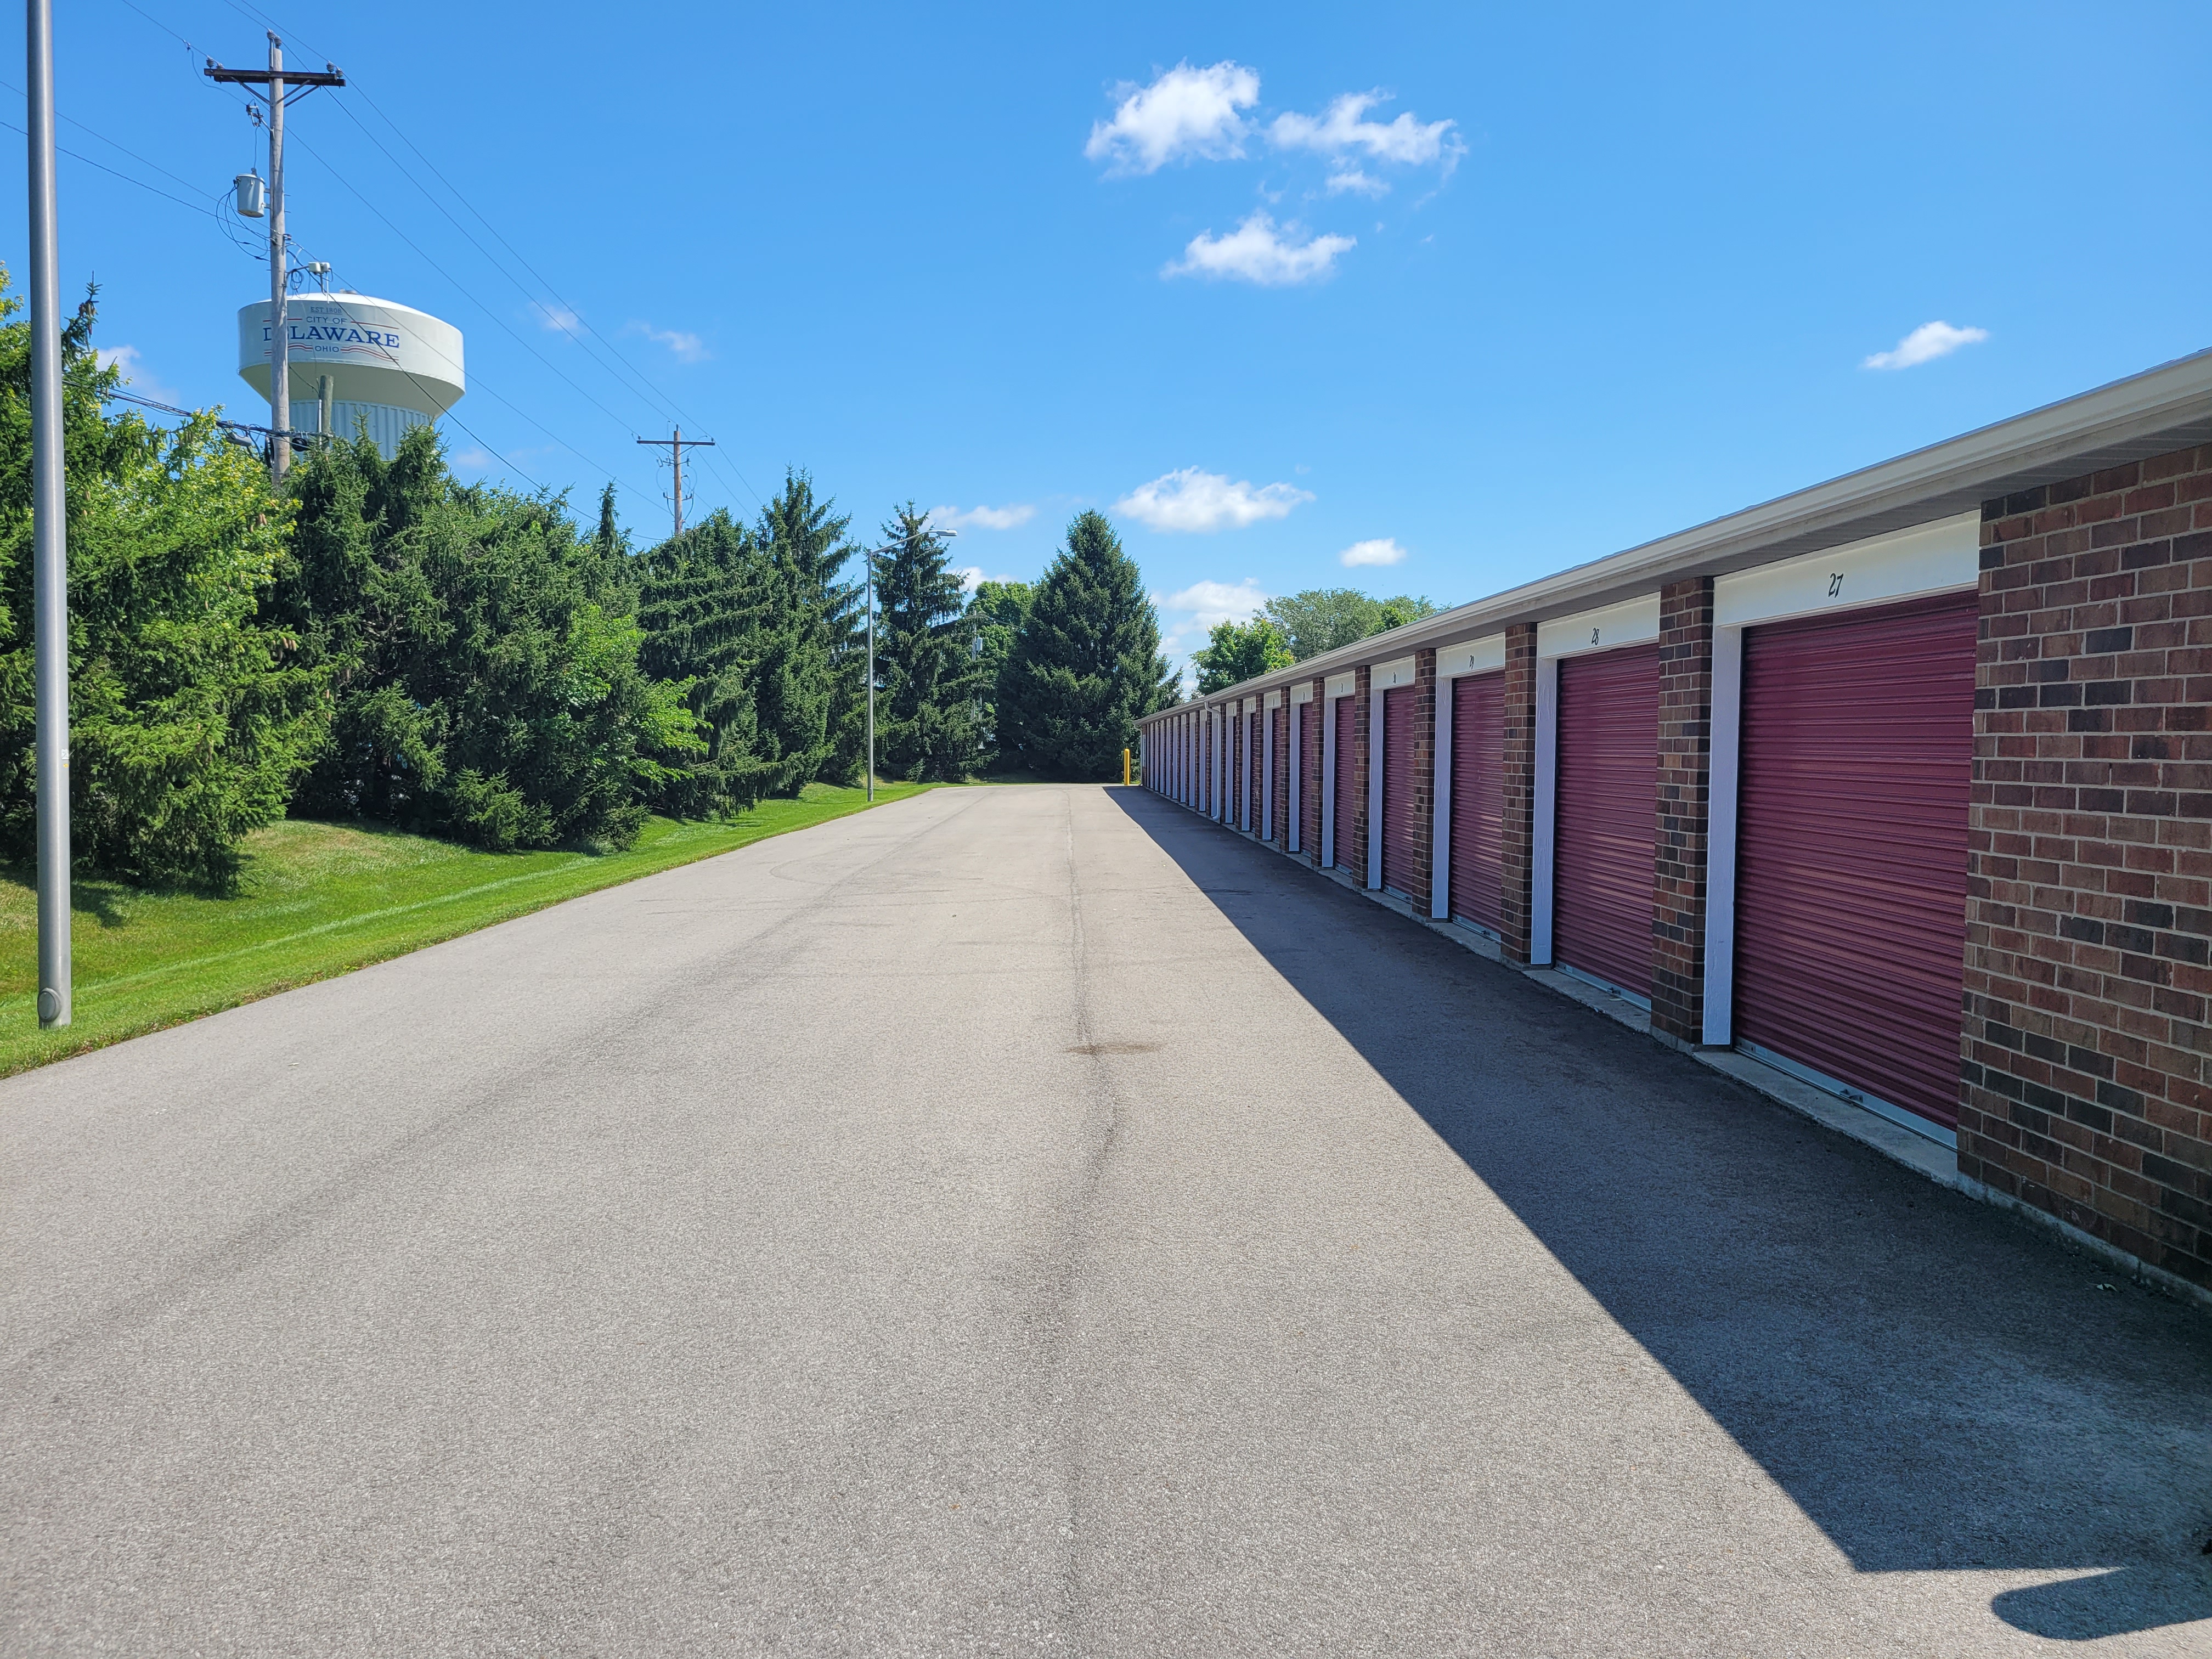 Buckeye Storage - Secure Storage Units in Delaware, OH